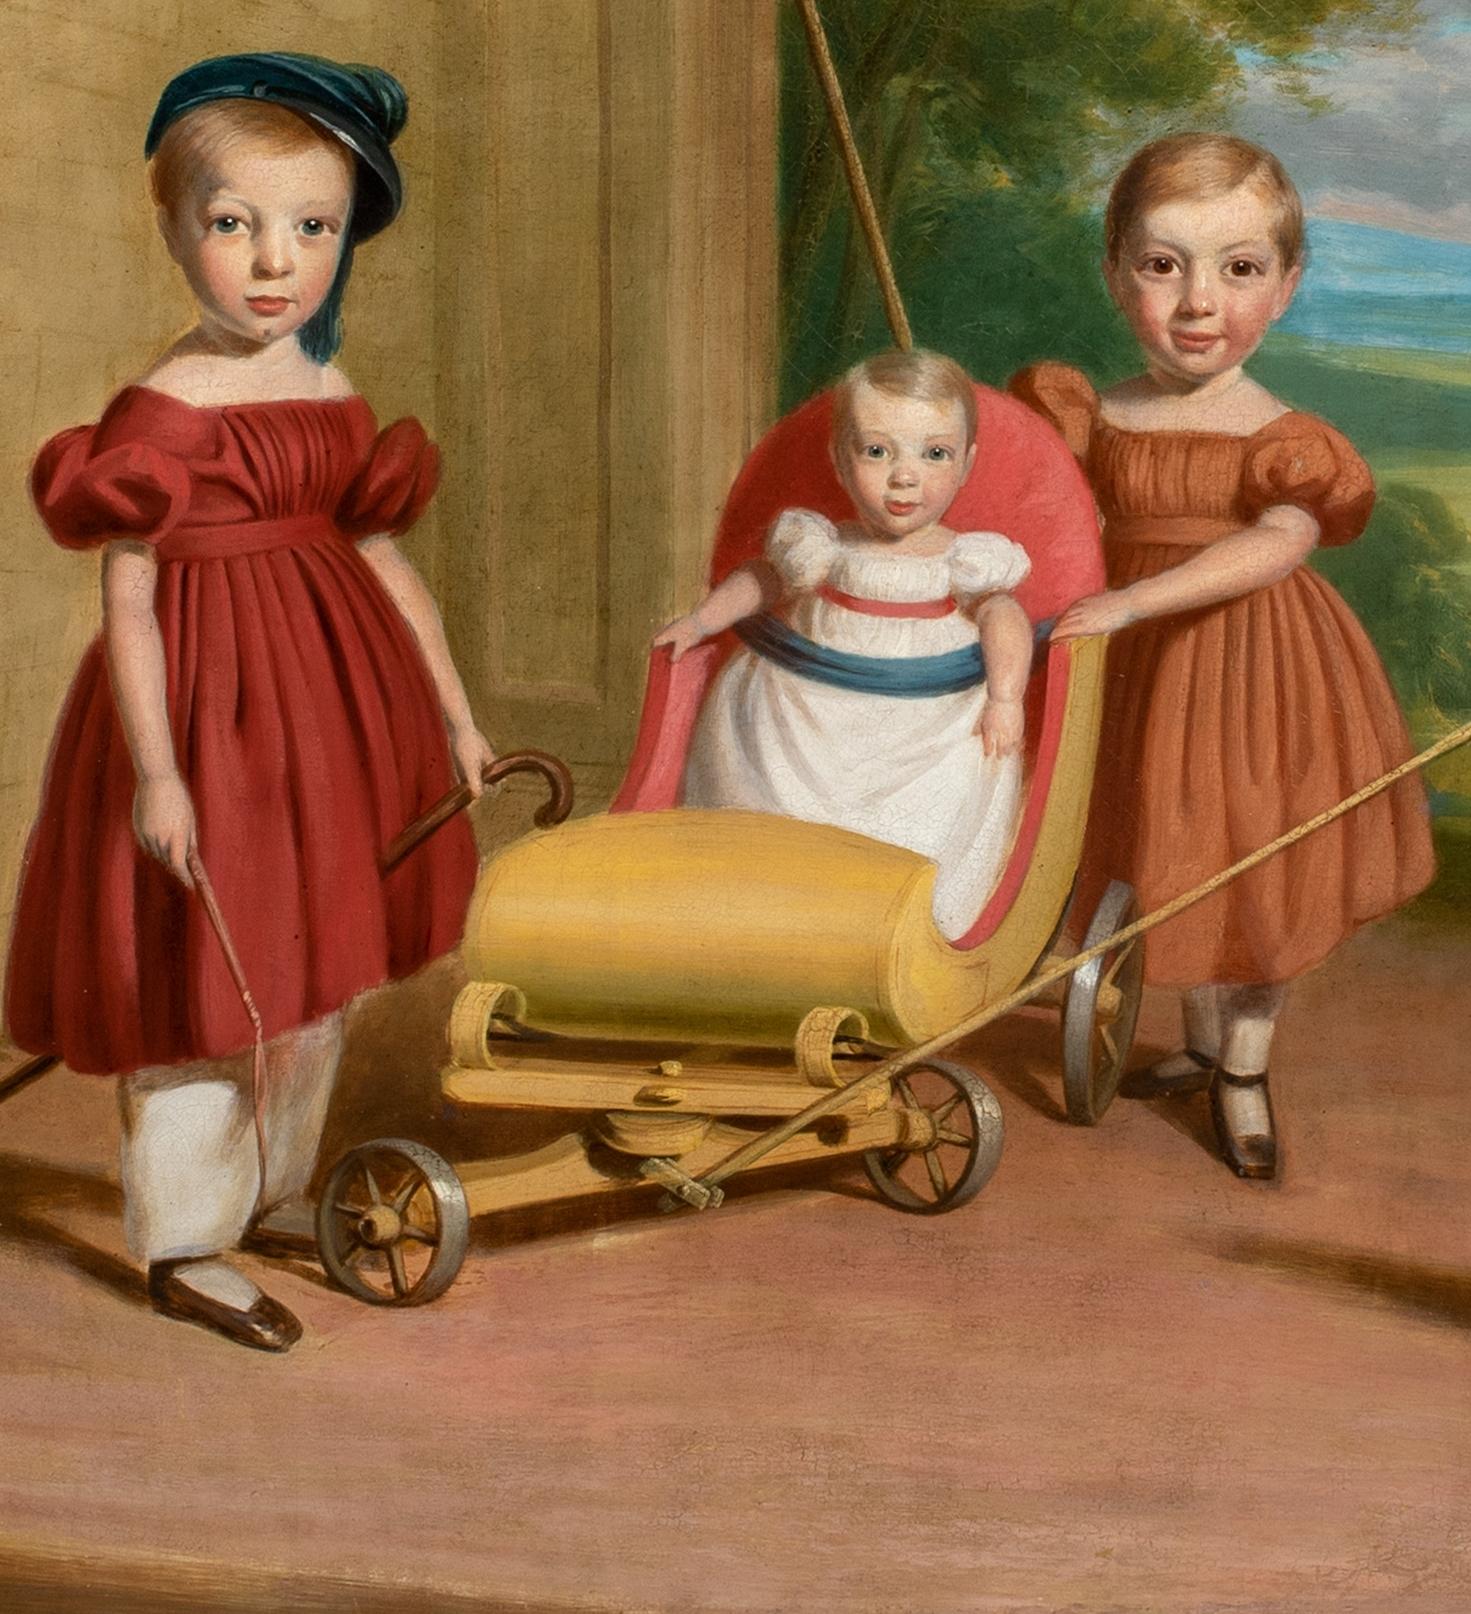 Portrait Of Children Playing, 19th Century American School 1